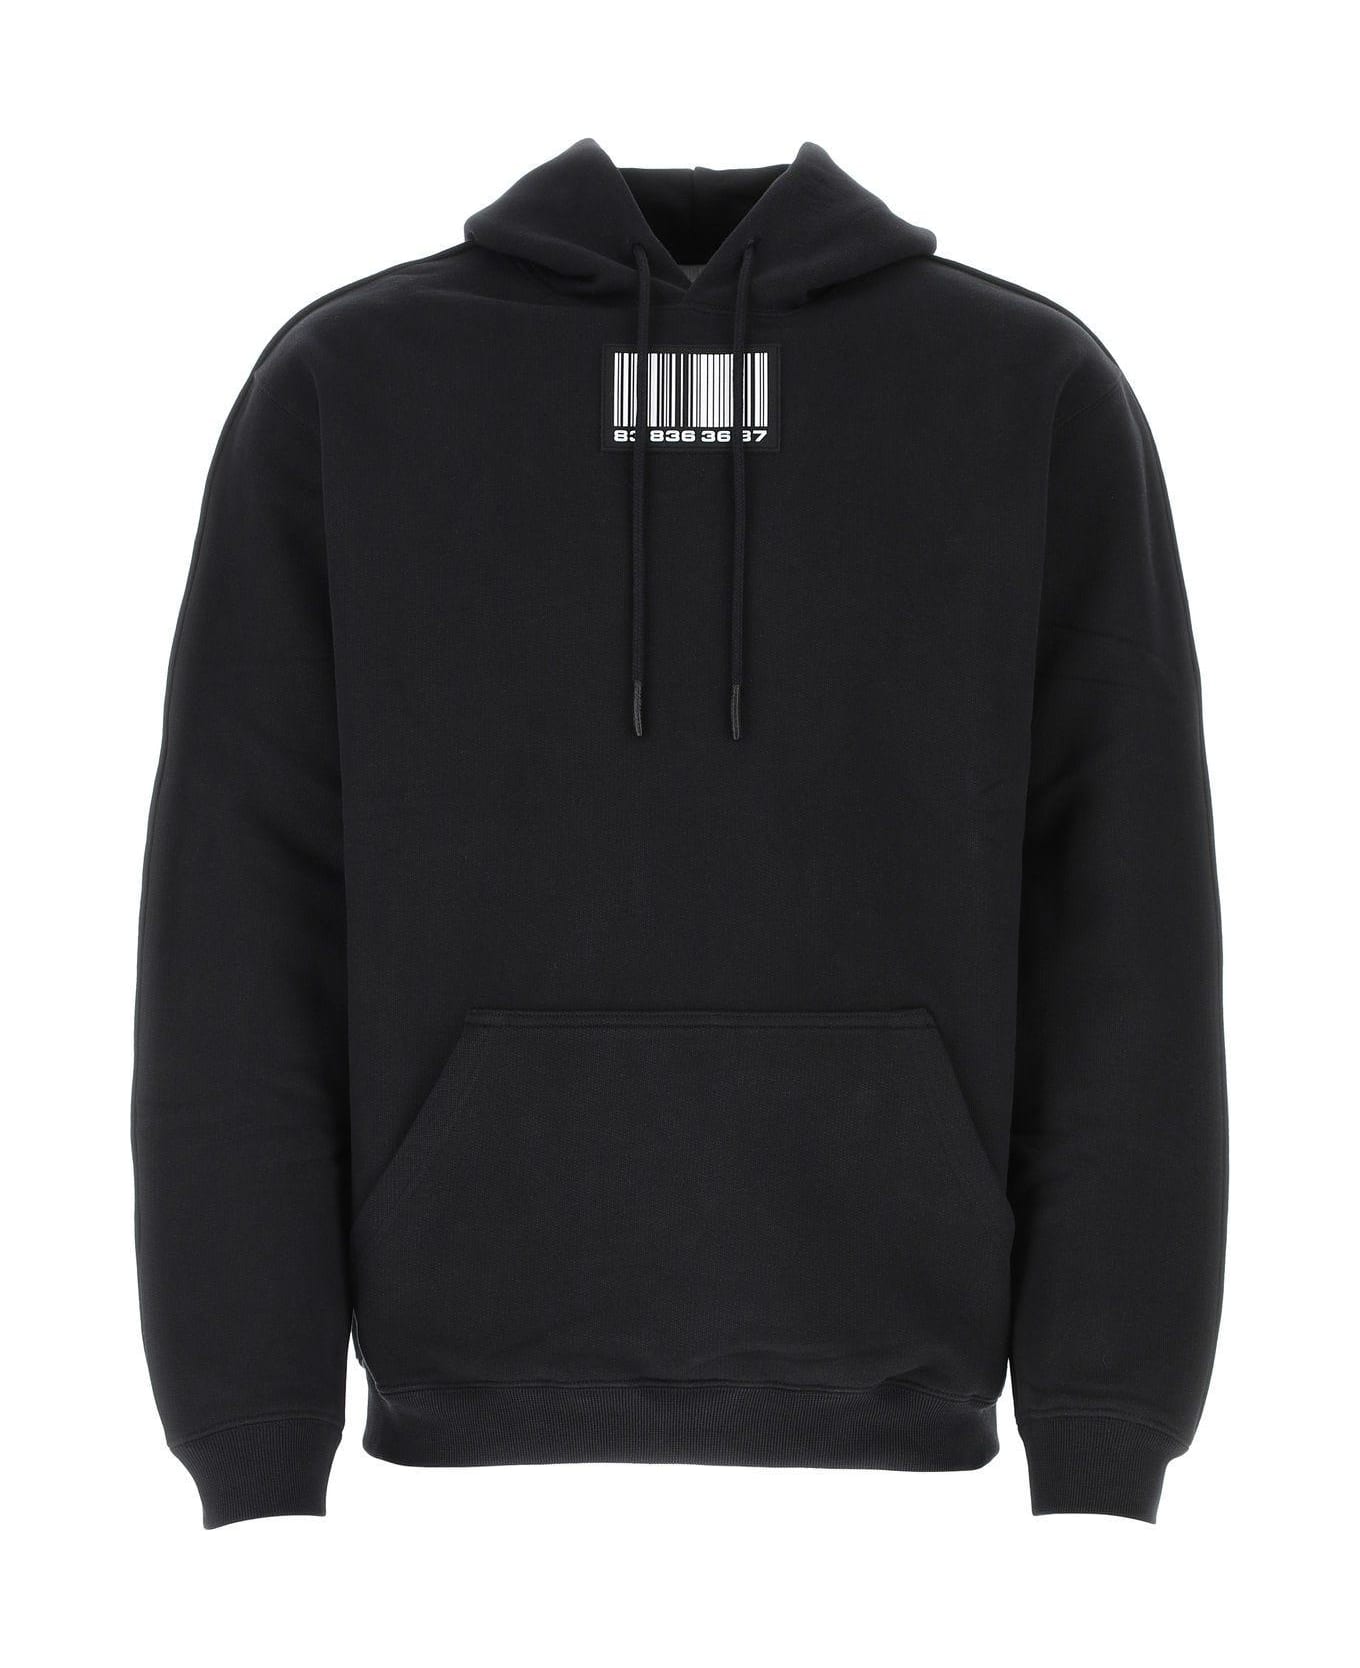 VTMNTS Black Cotton Blend Oversize Sweatshirt - BLACK